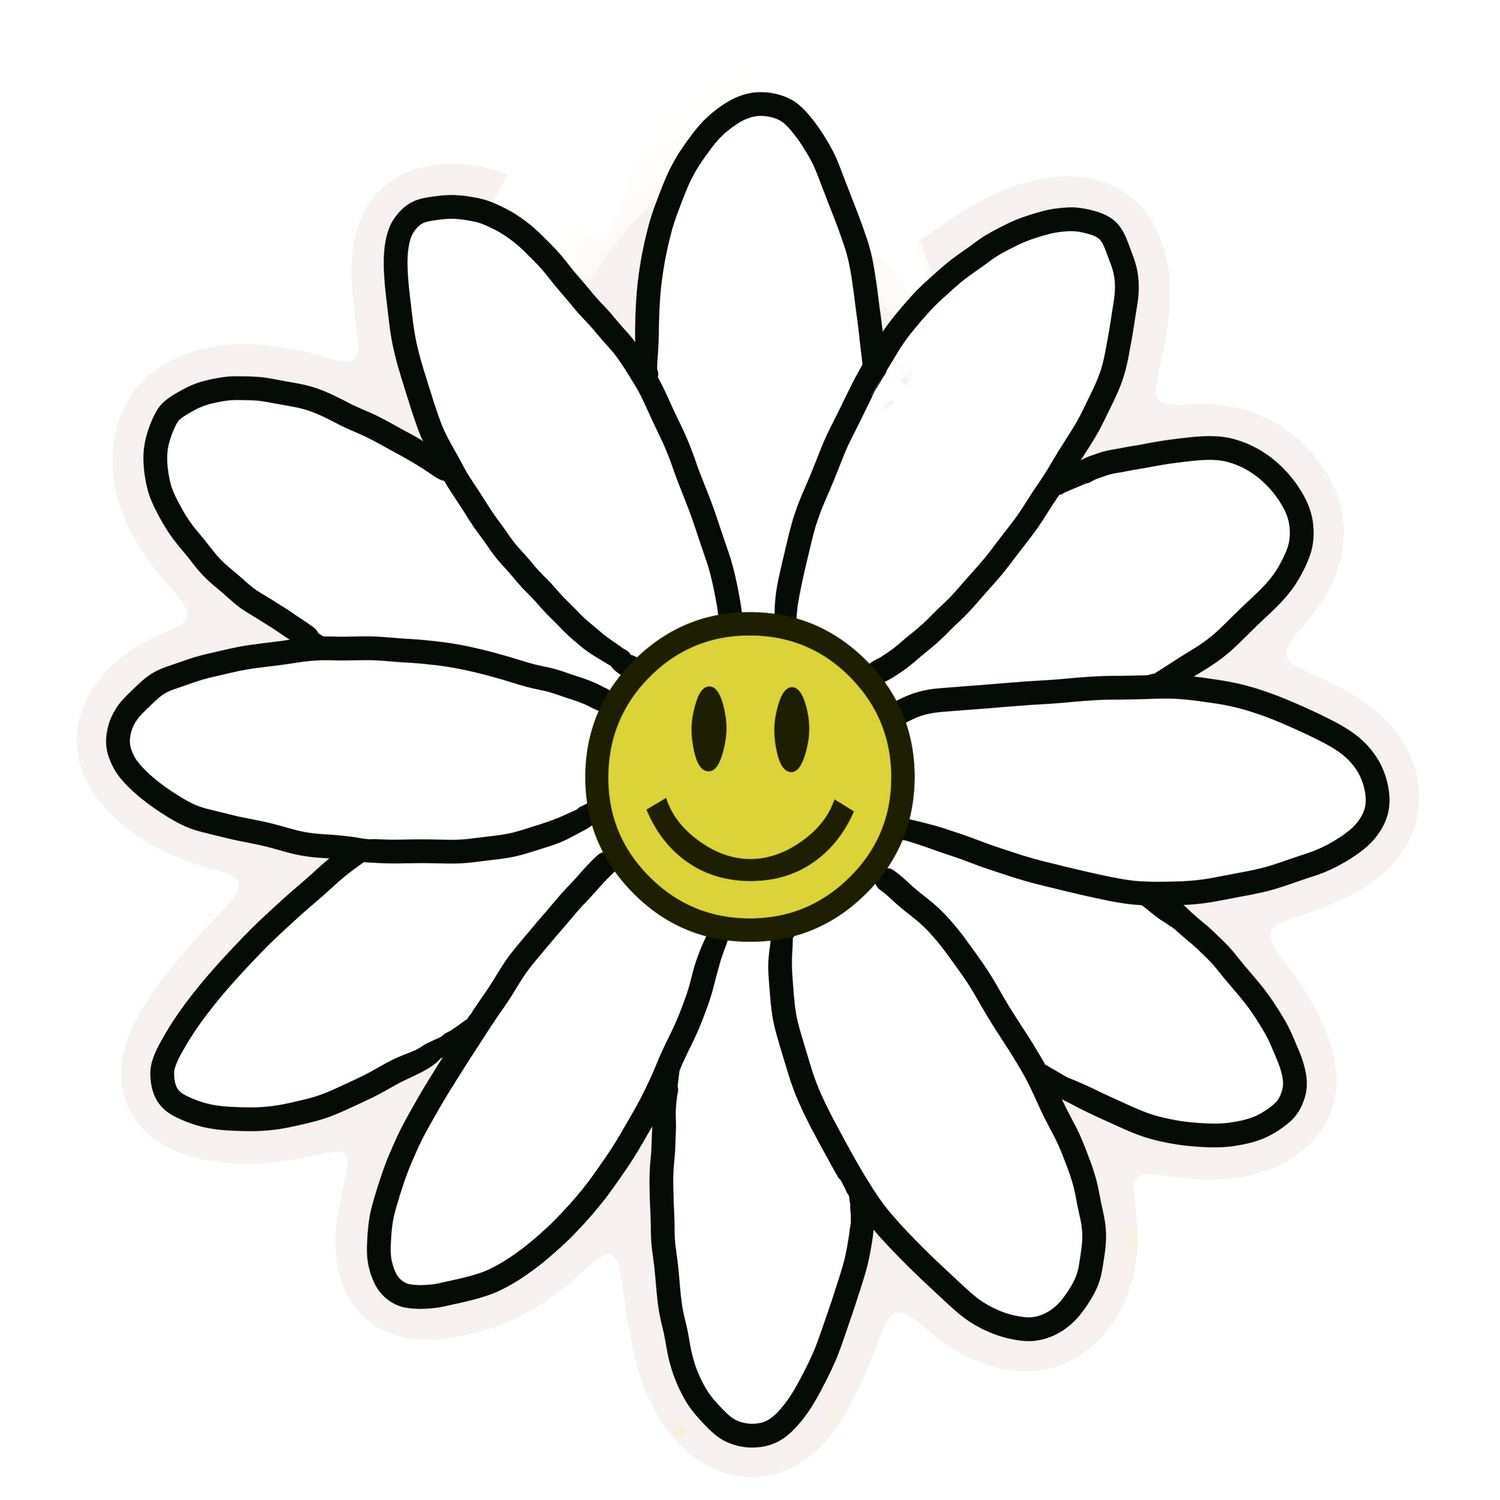 Smiley face daisy sticker